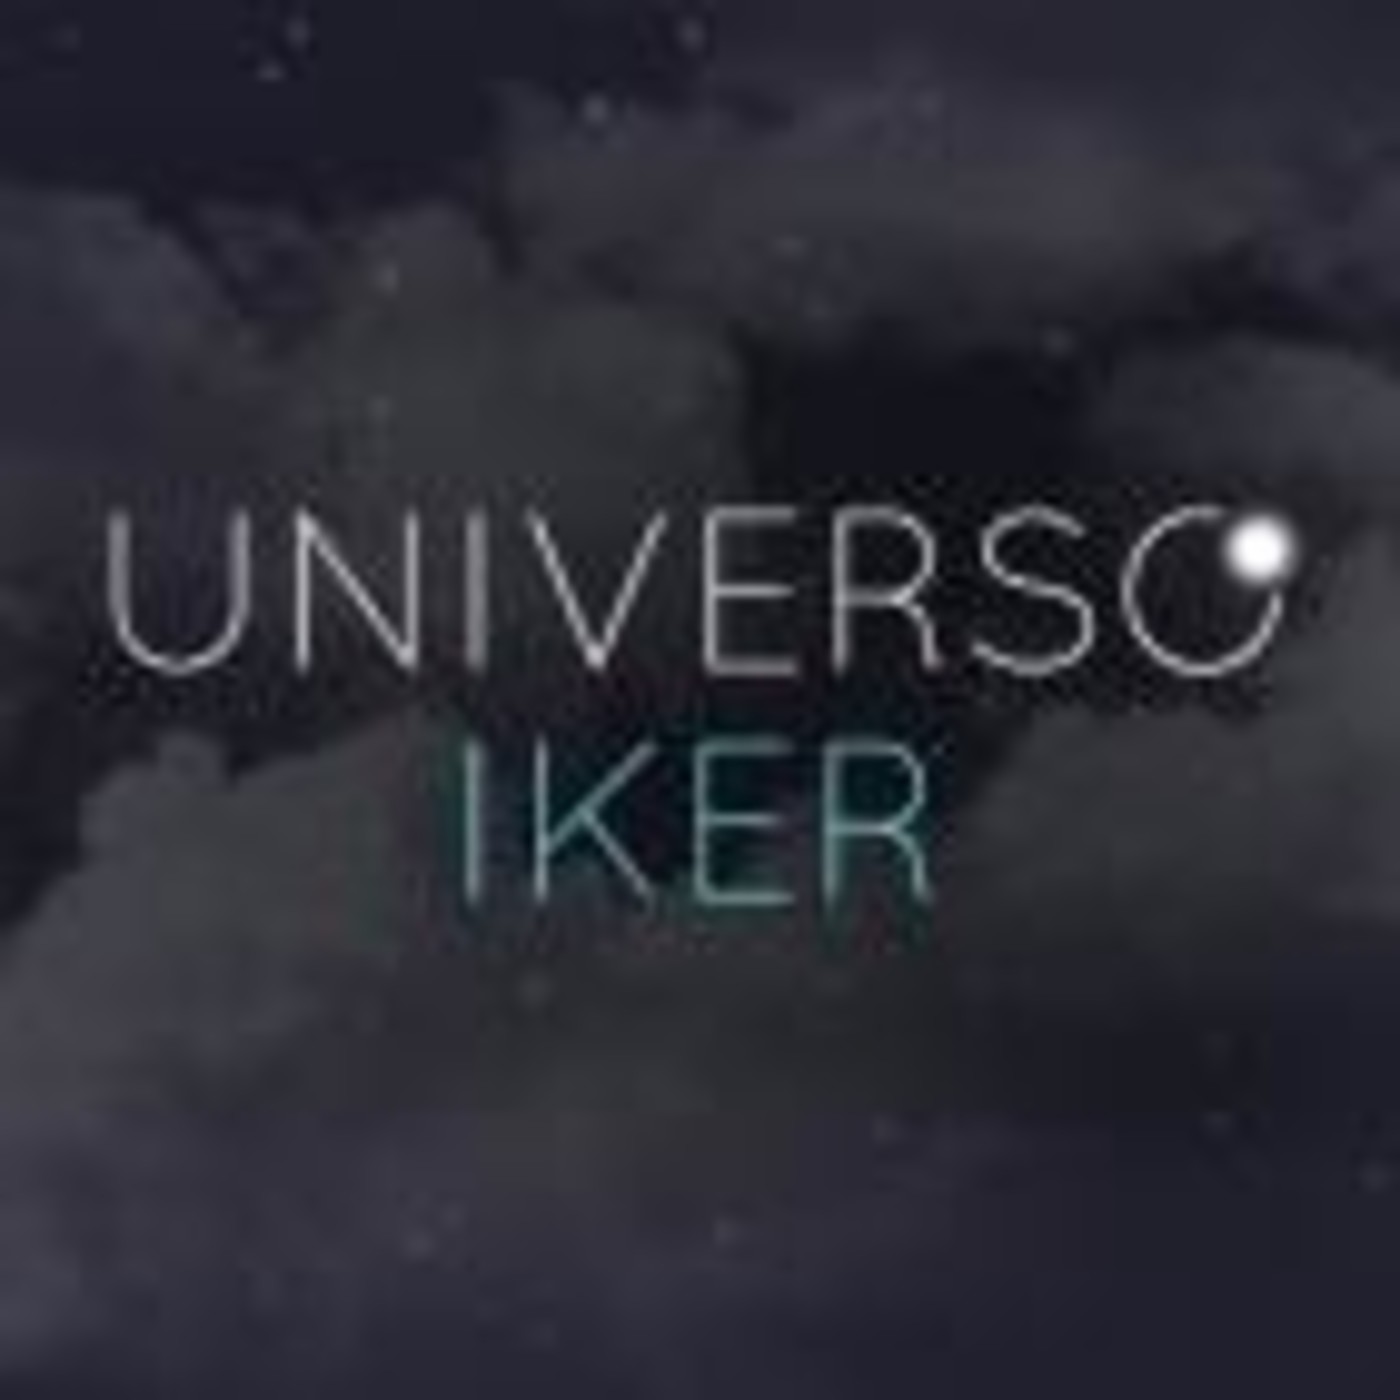 Universo Iker T3x32 - Jaque mate español